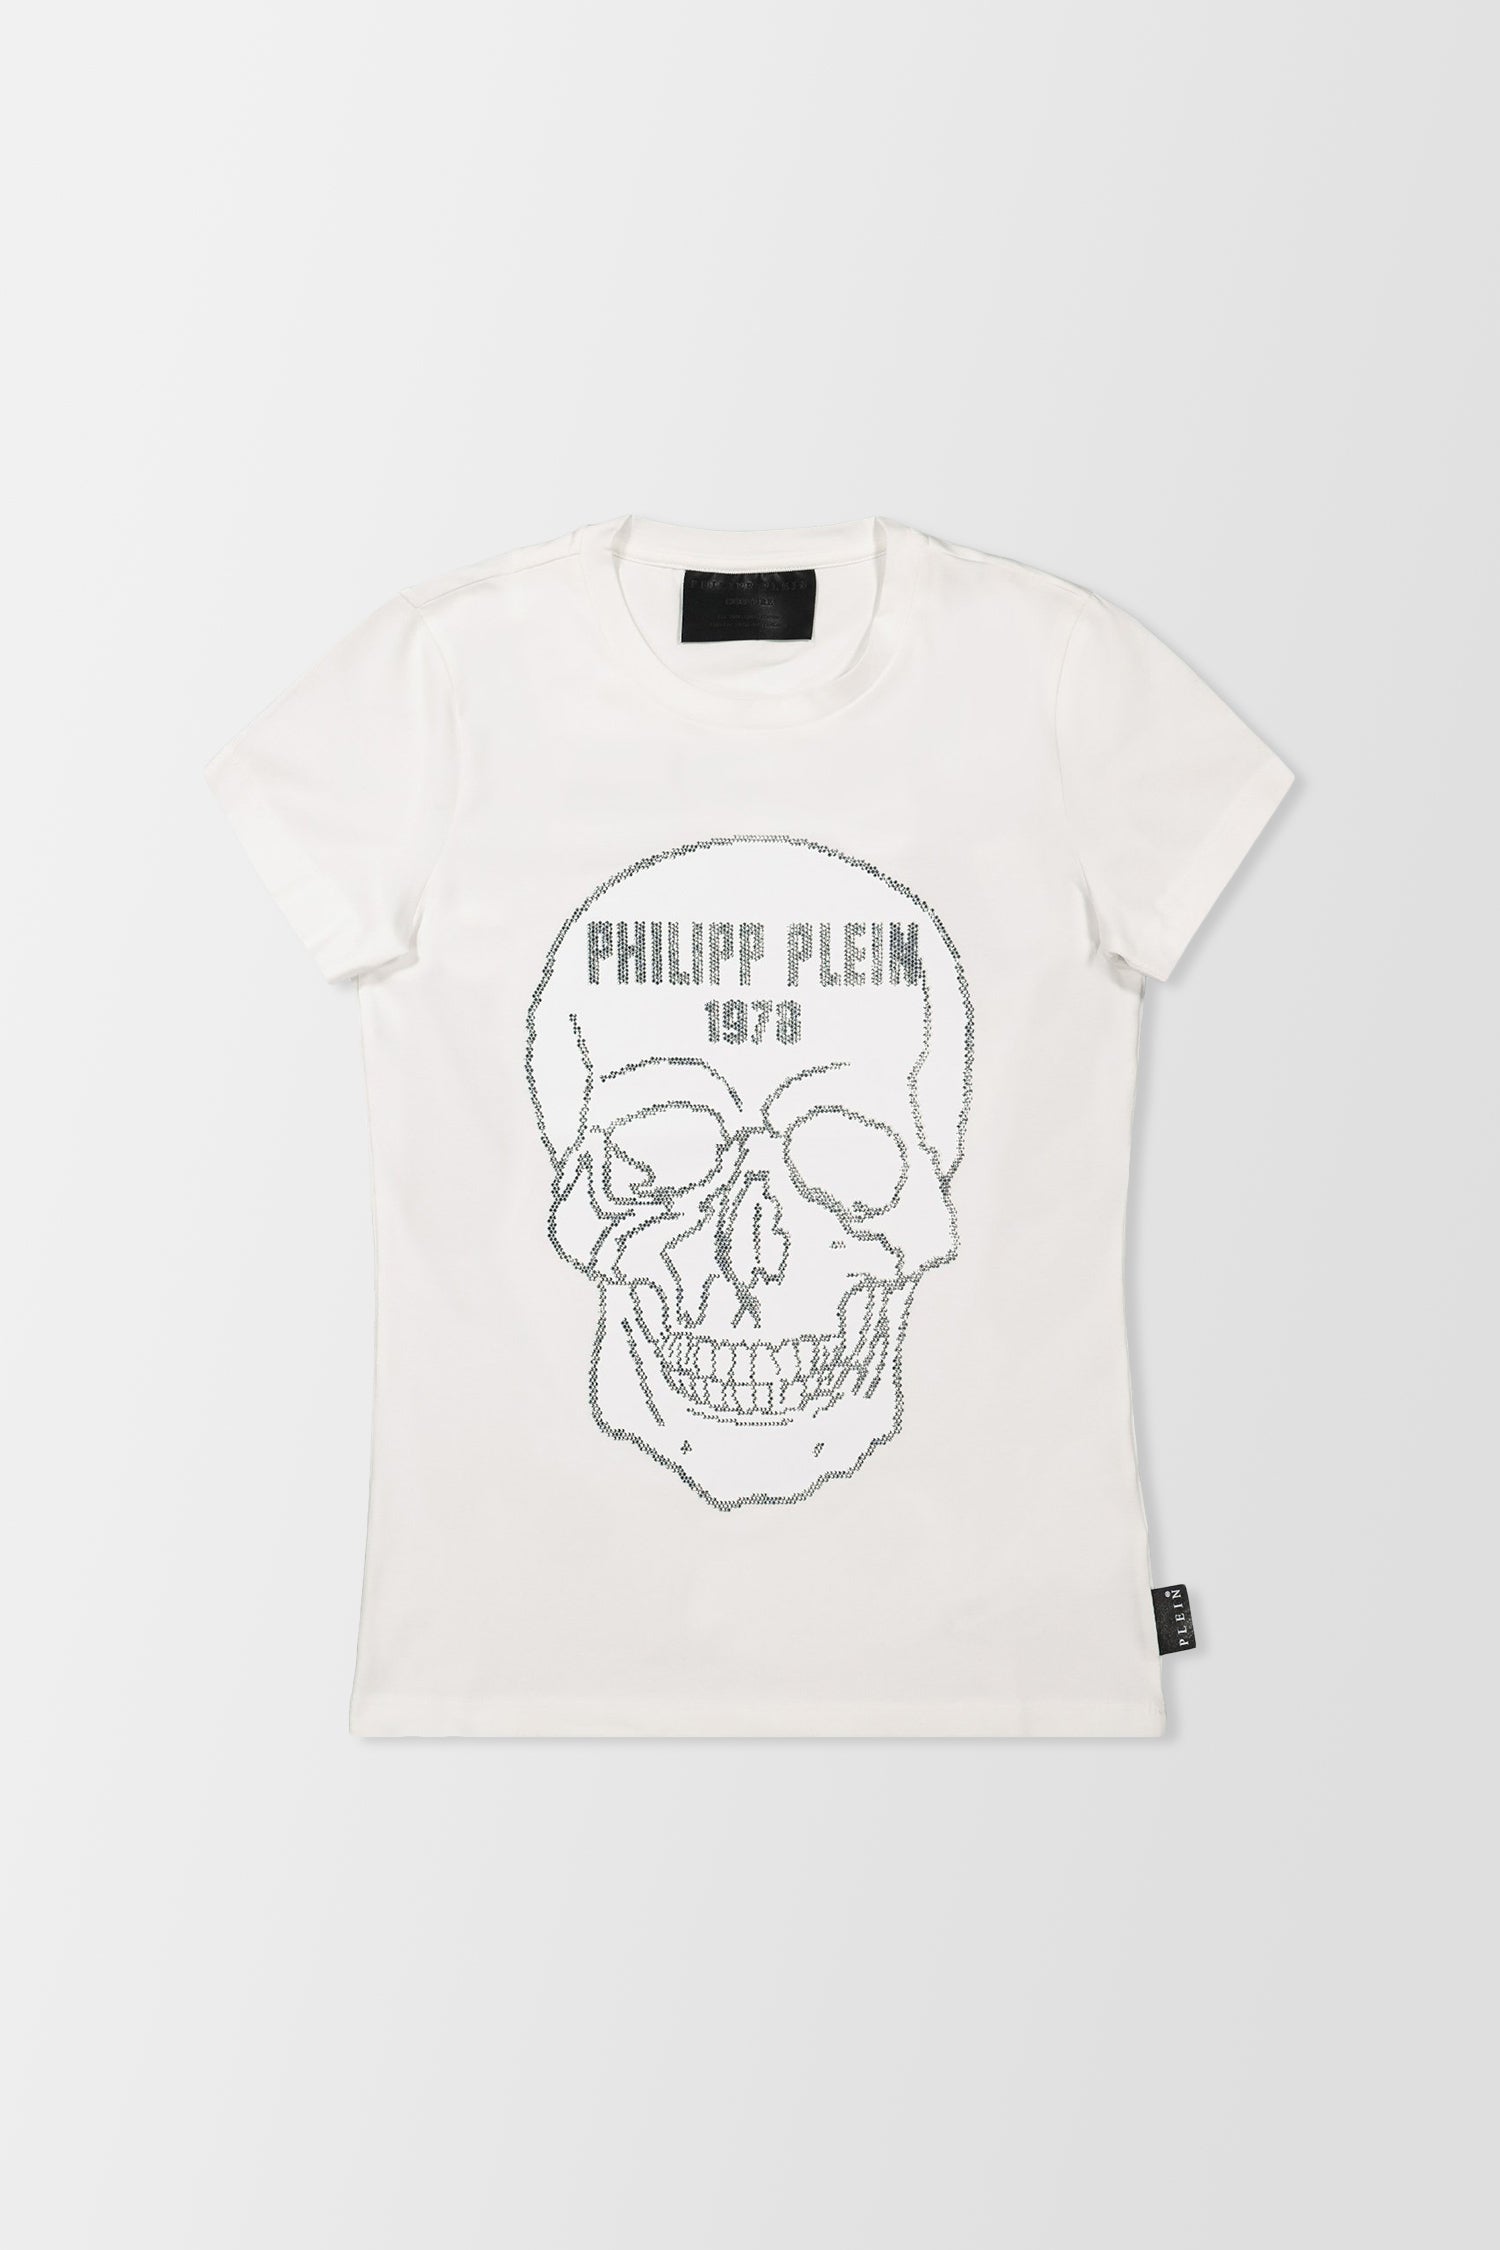 Philipp Plein Round Neck SS Skull T-Shirt